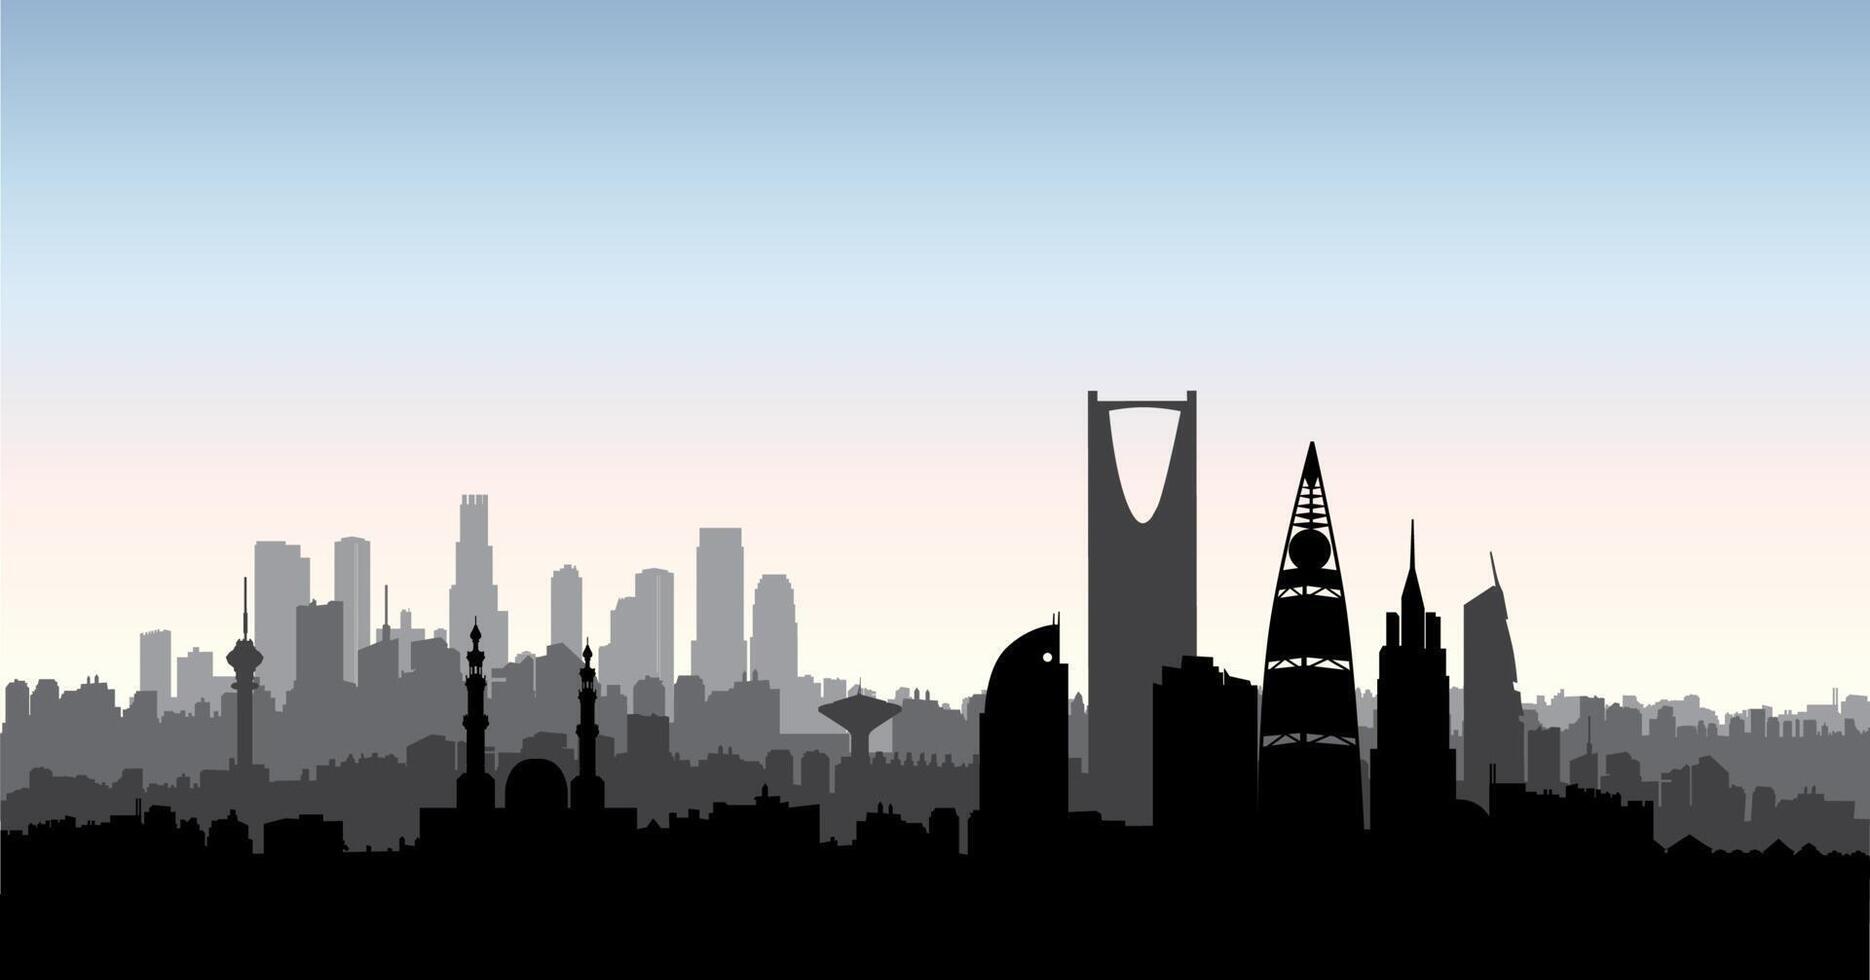 Riyadh city skyline. Cityscape silhouette with landmarks. Urban background vector